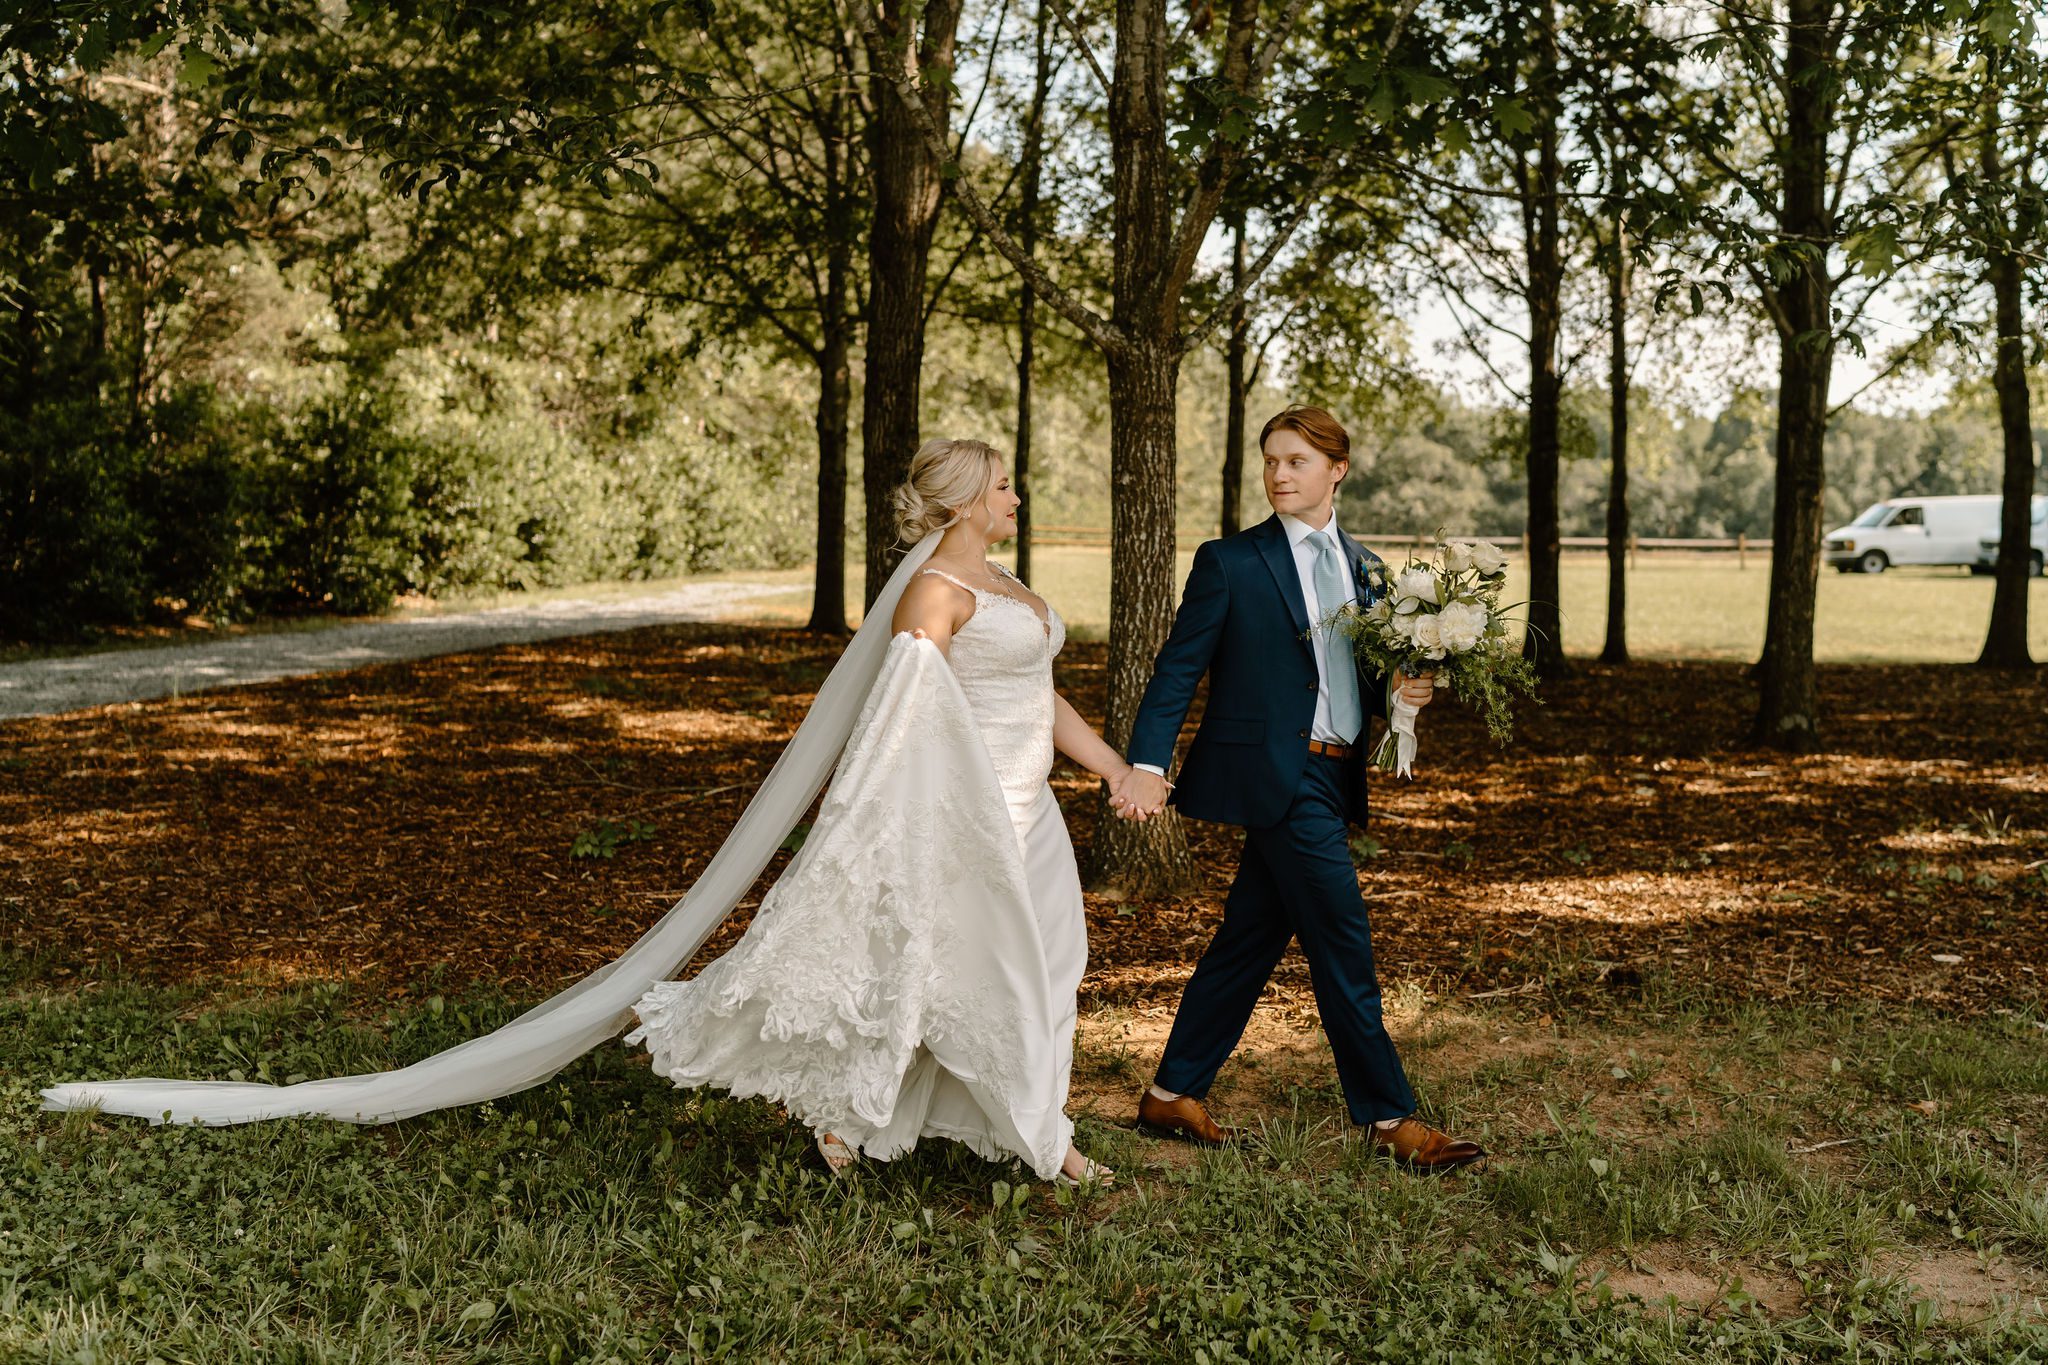 North Carolina bride and groom photos with beautiful backdrops and dreamy decor
